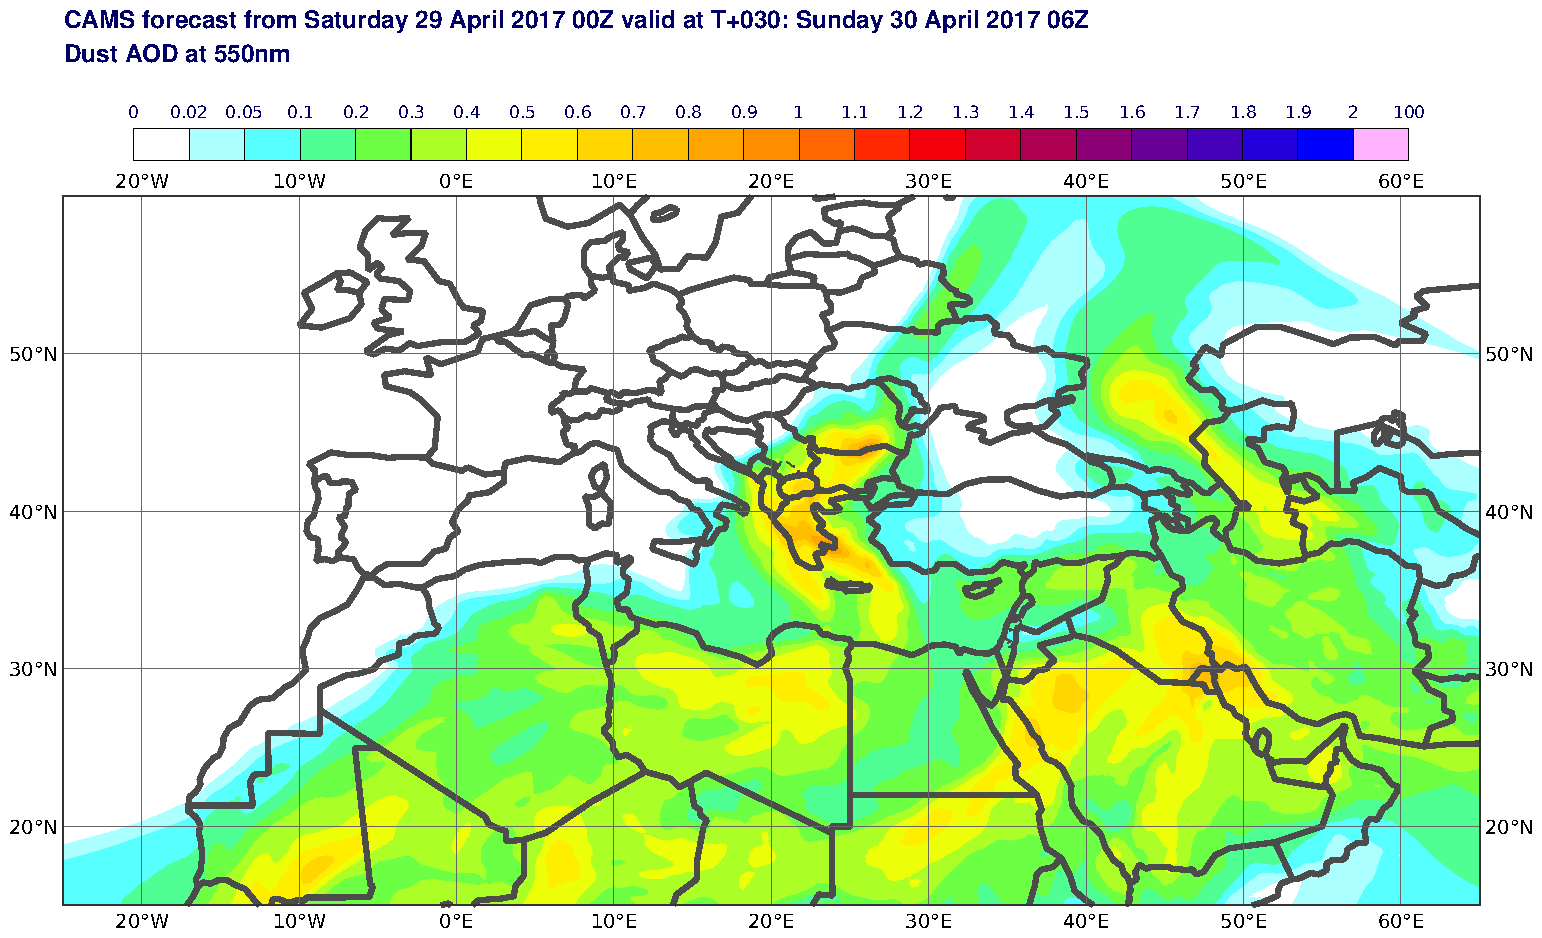 Dust AOD at 550nm valid at T30 - 2017-04-30 06:00